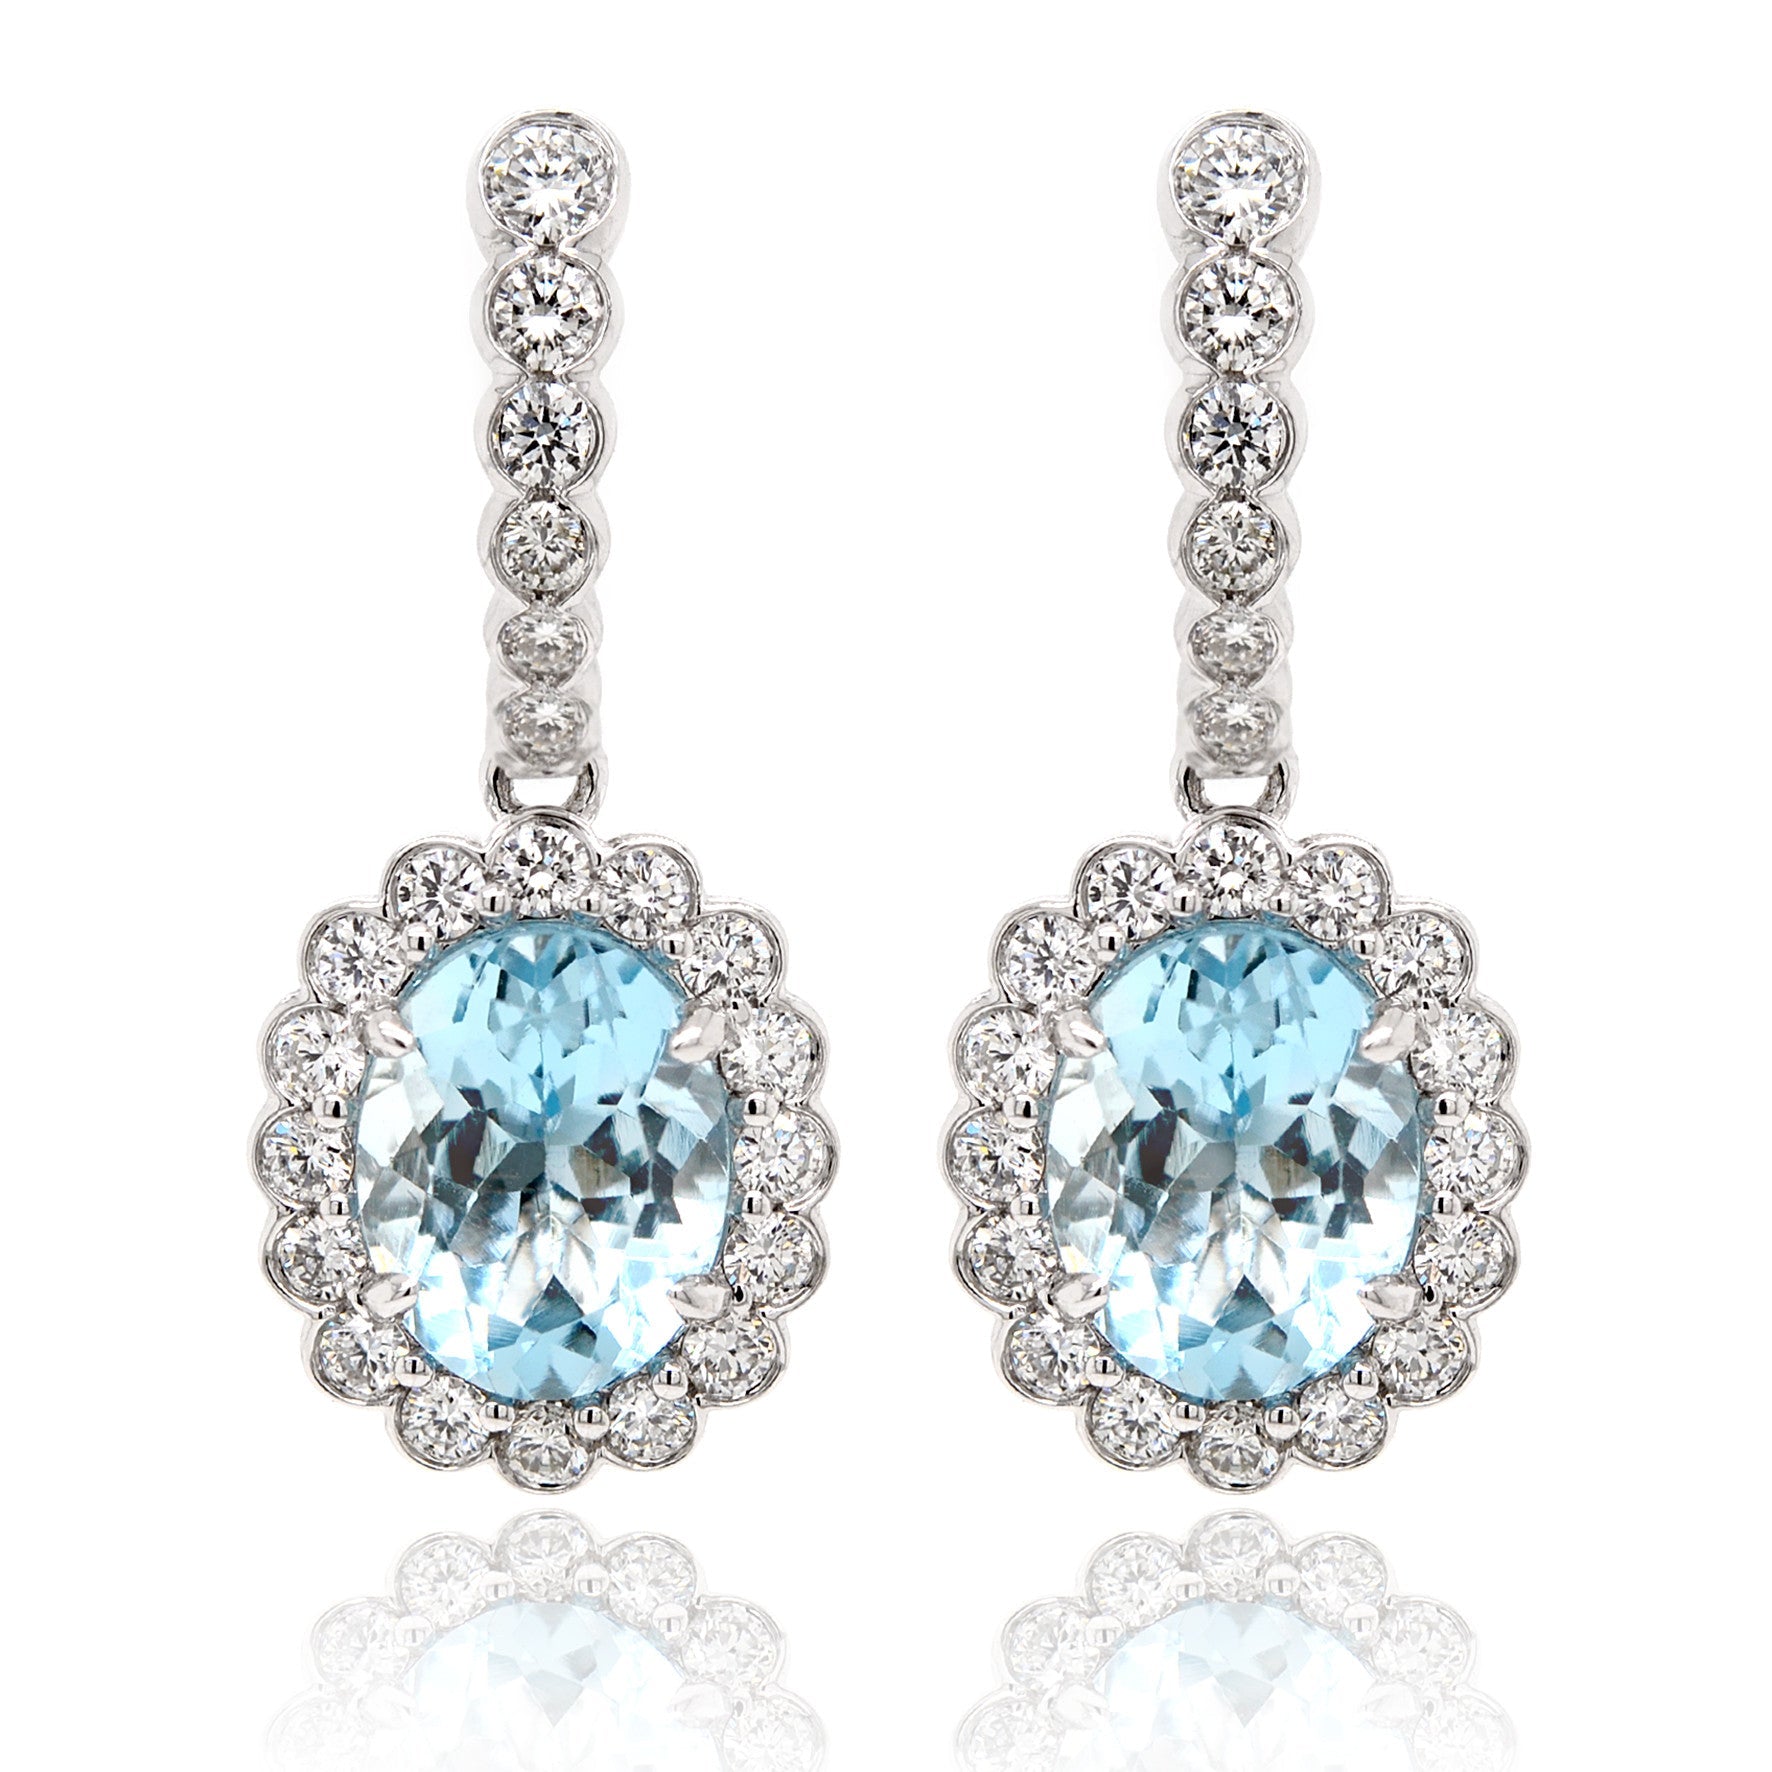 Oval Aquamarine Drop Earrings with a Halo of Diamonds - ForeverJewels Design Studio 8